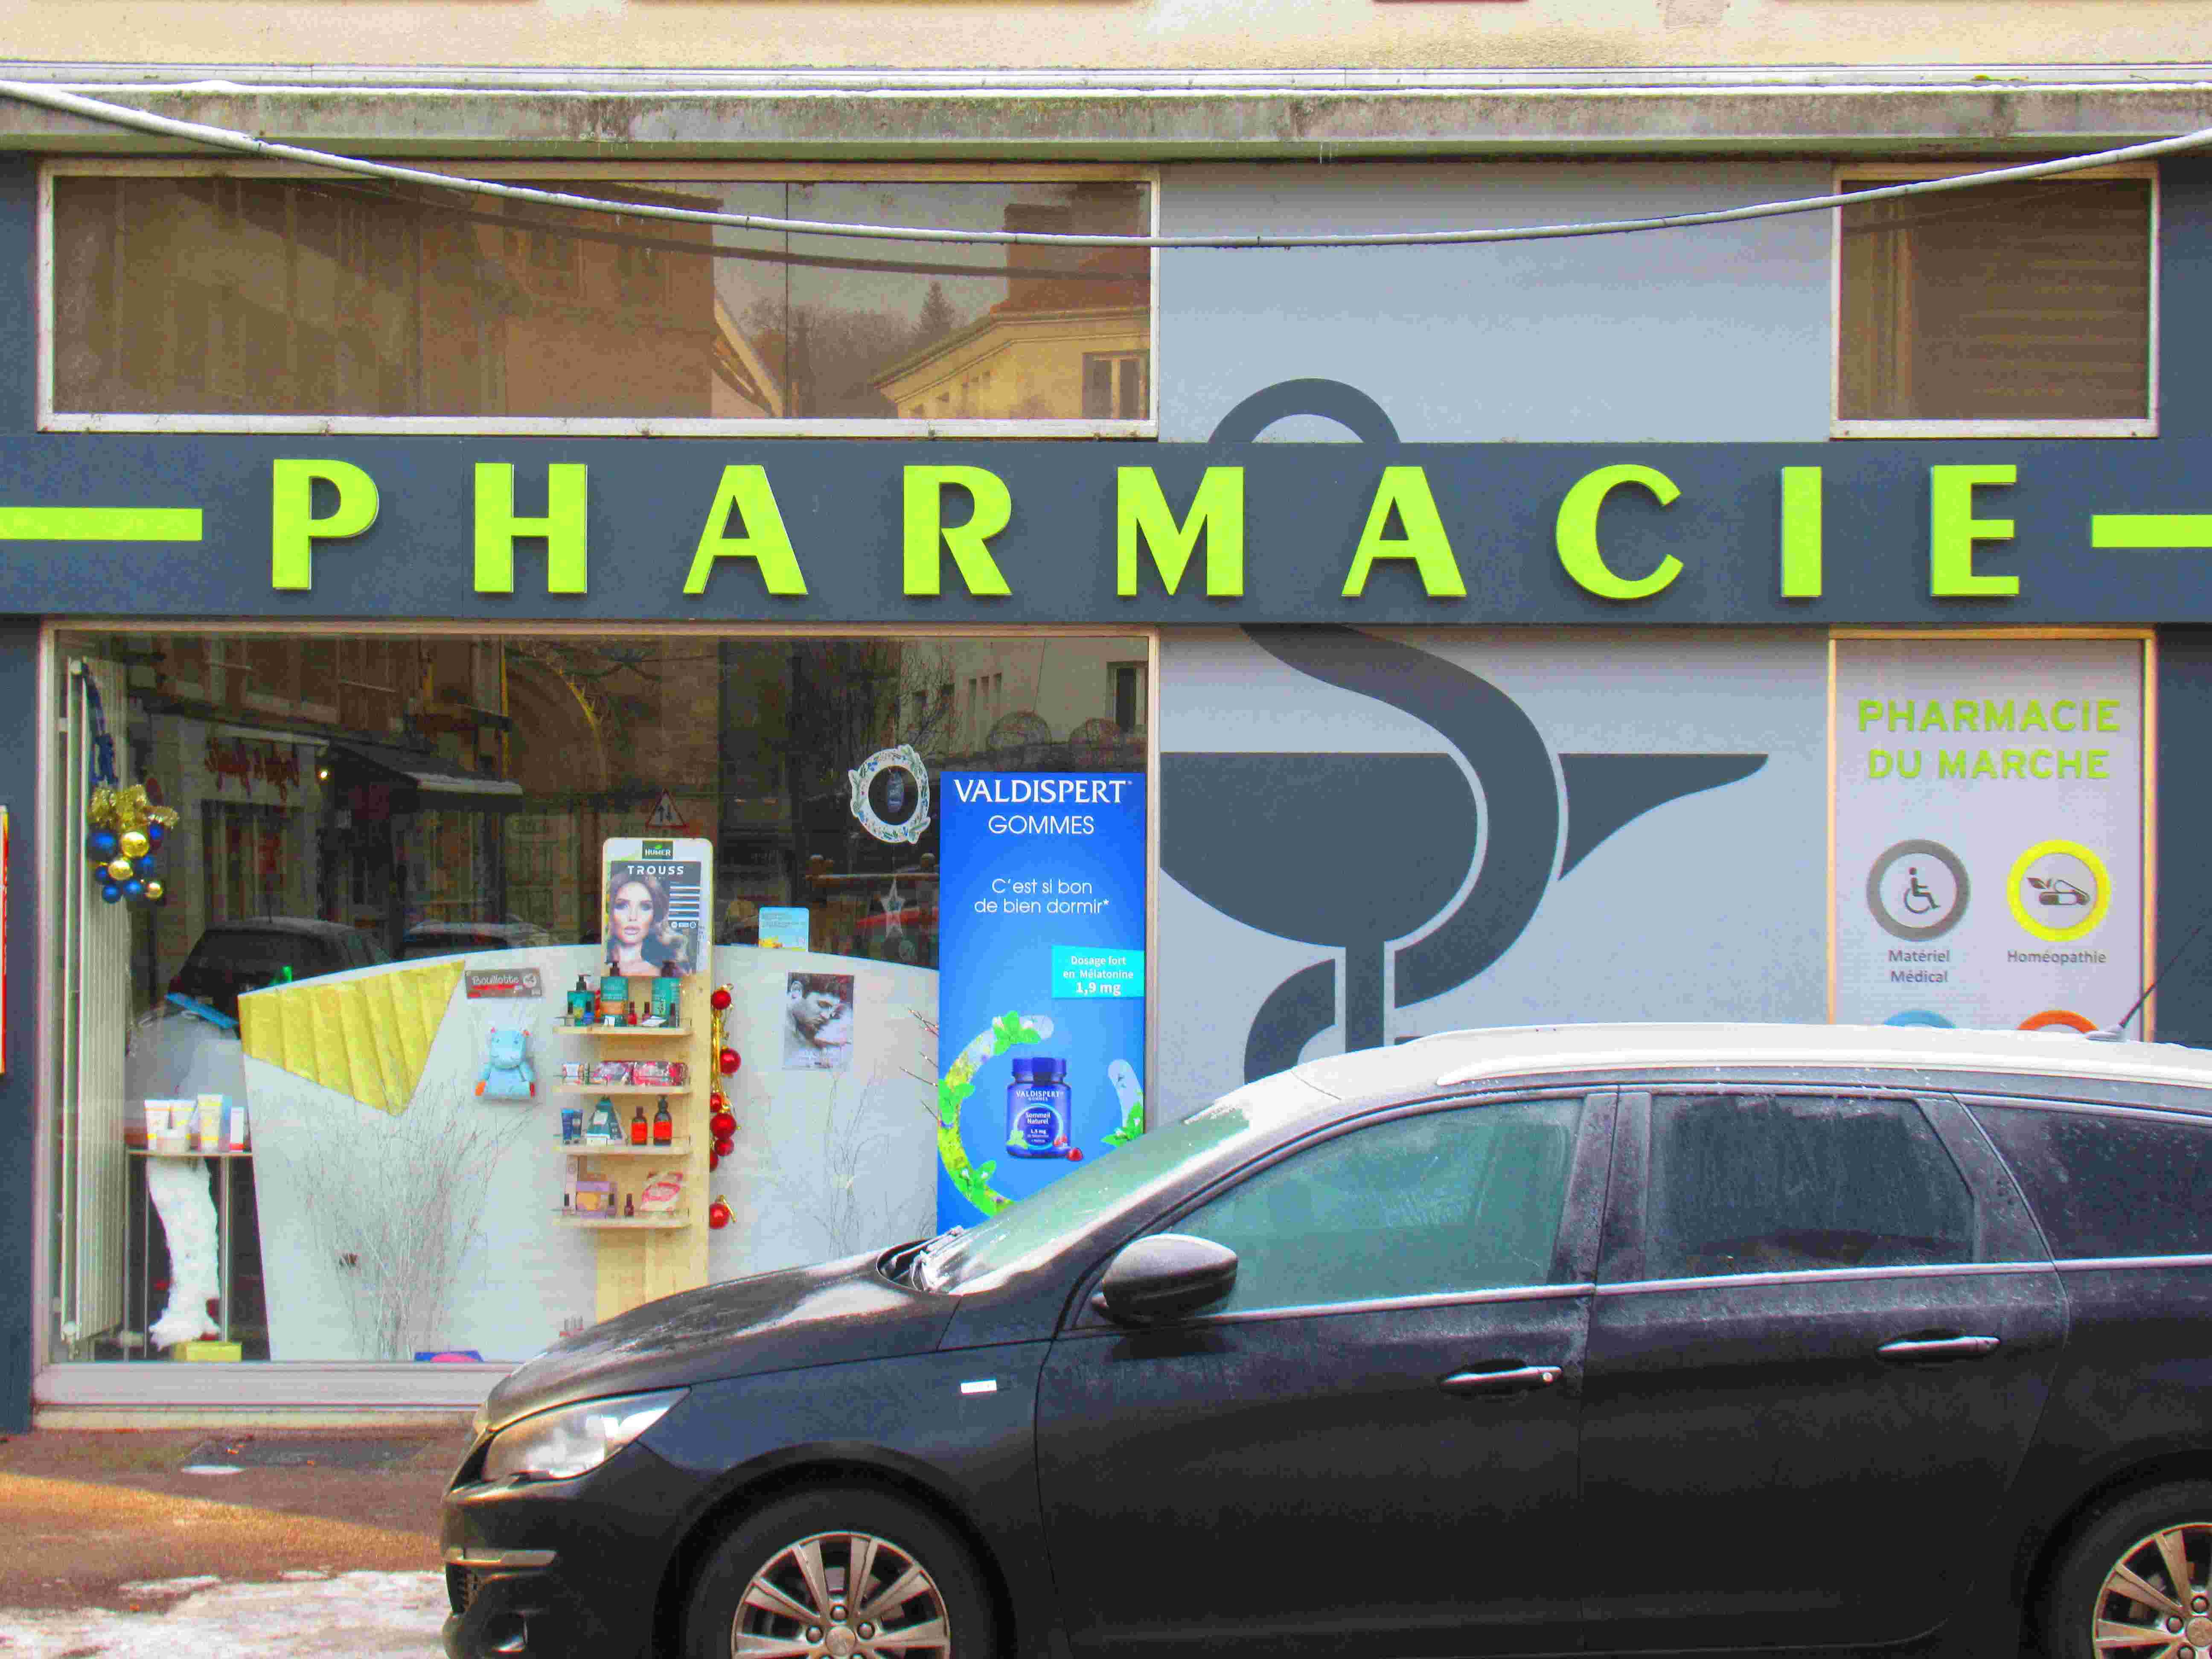 Pharmacie officine